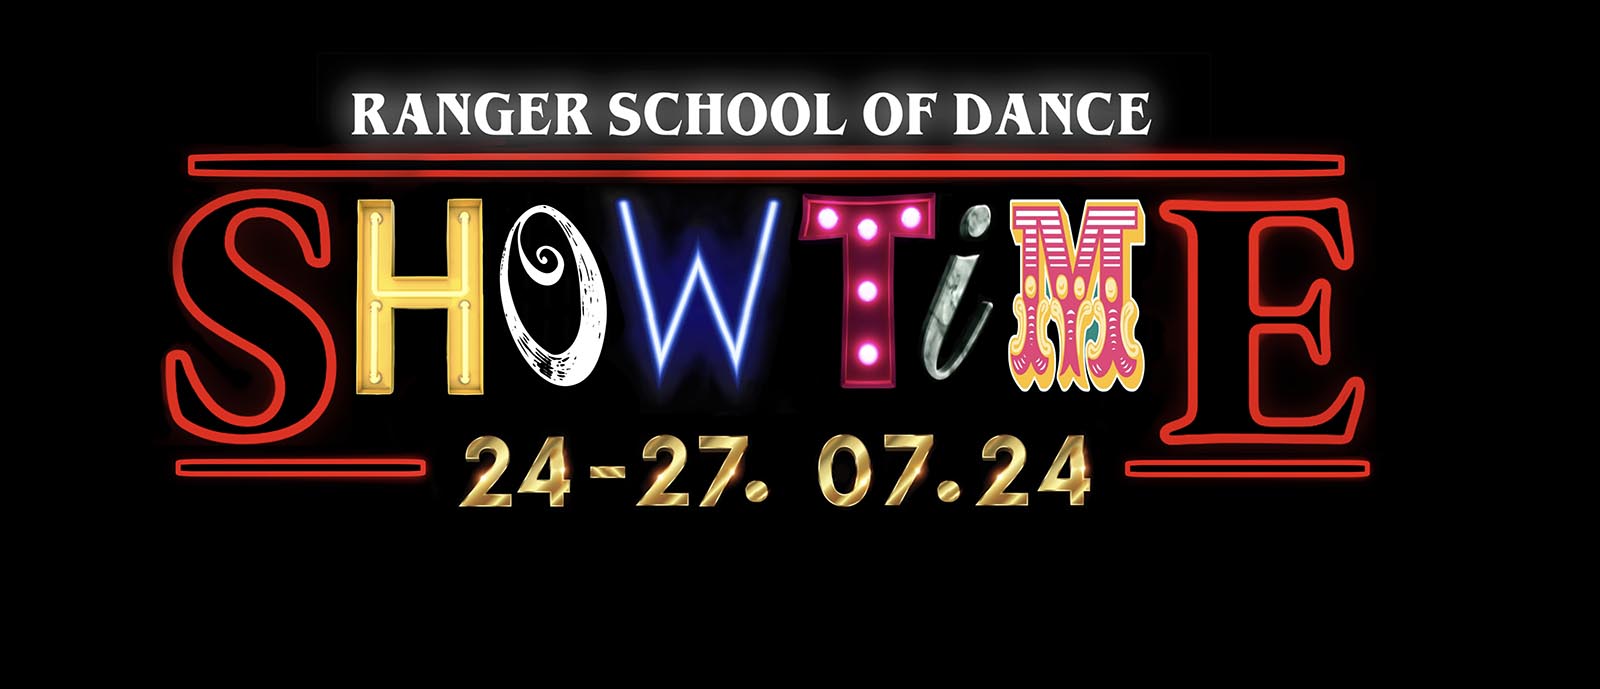 Ranger School of Dance - Showtime